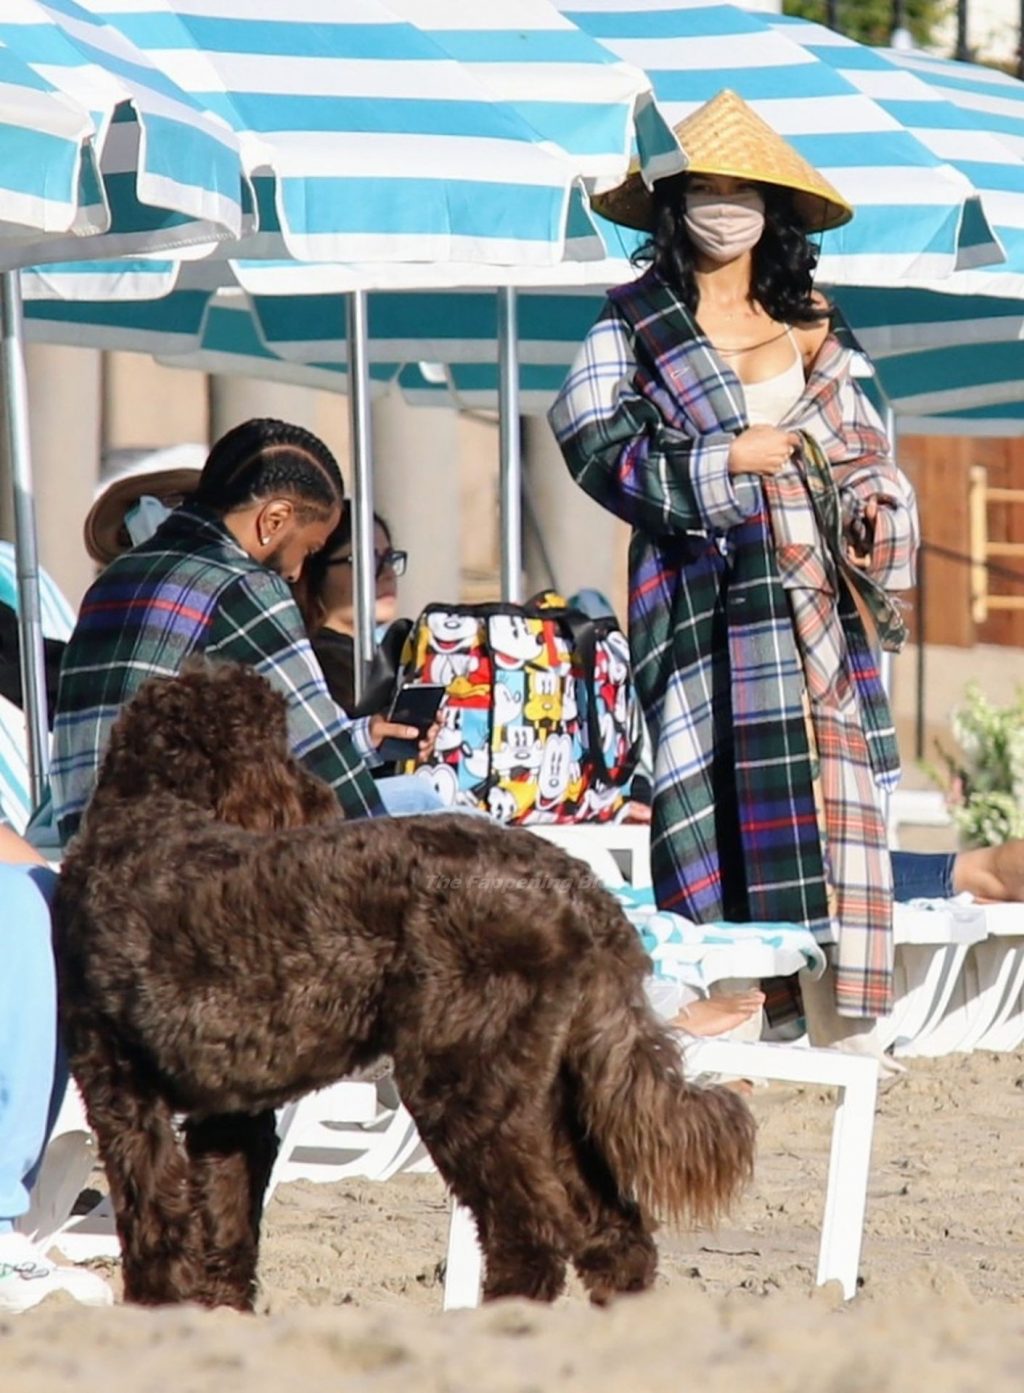 Big Sean and Jhené Aiko Enjoy Their Valentine’s Day on the Beach in Santa Barbara (15 Photos)